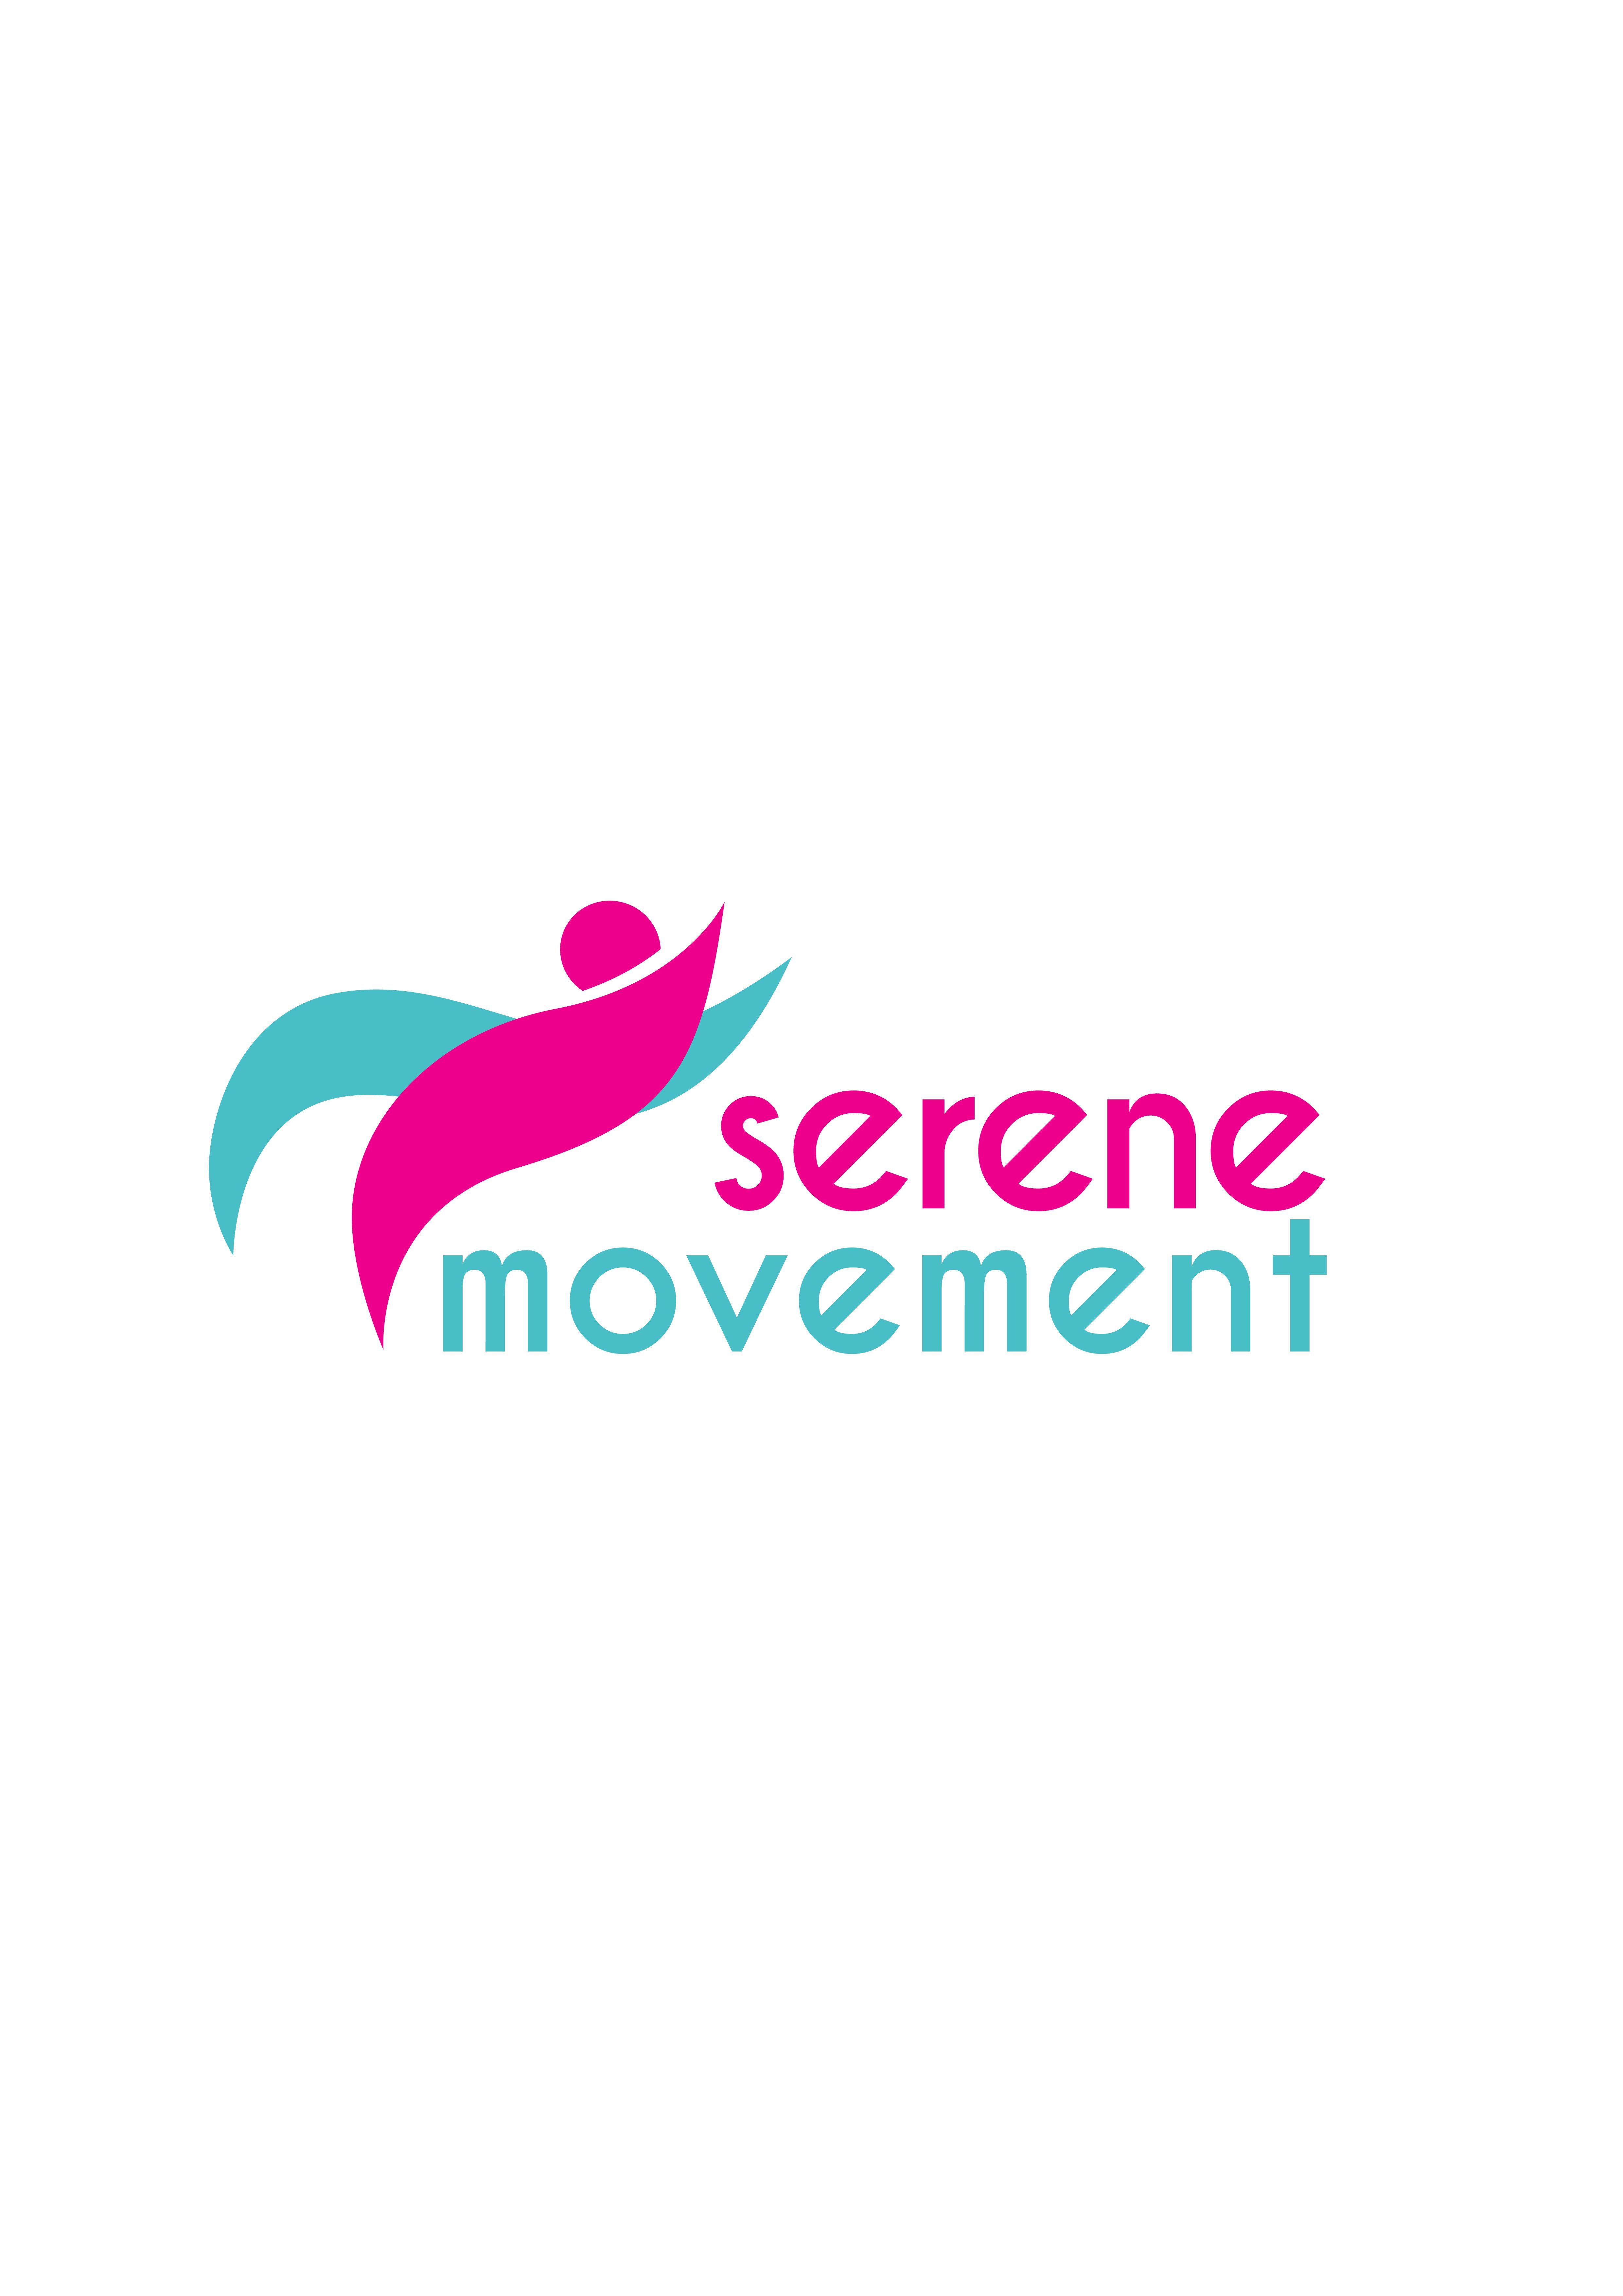 Movement Logo - Movement Logos